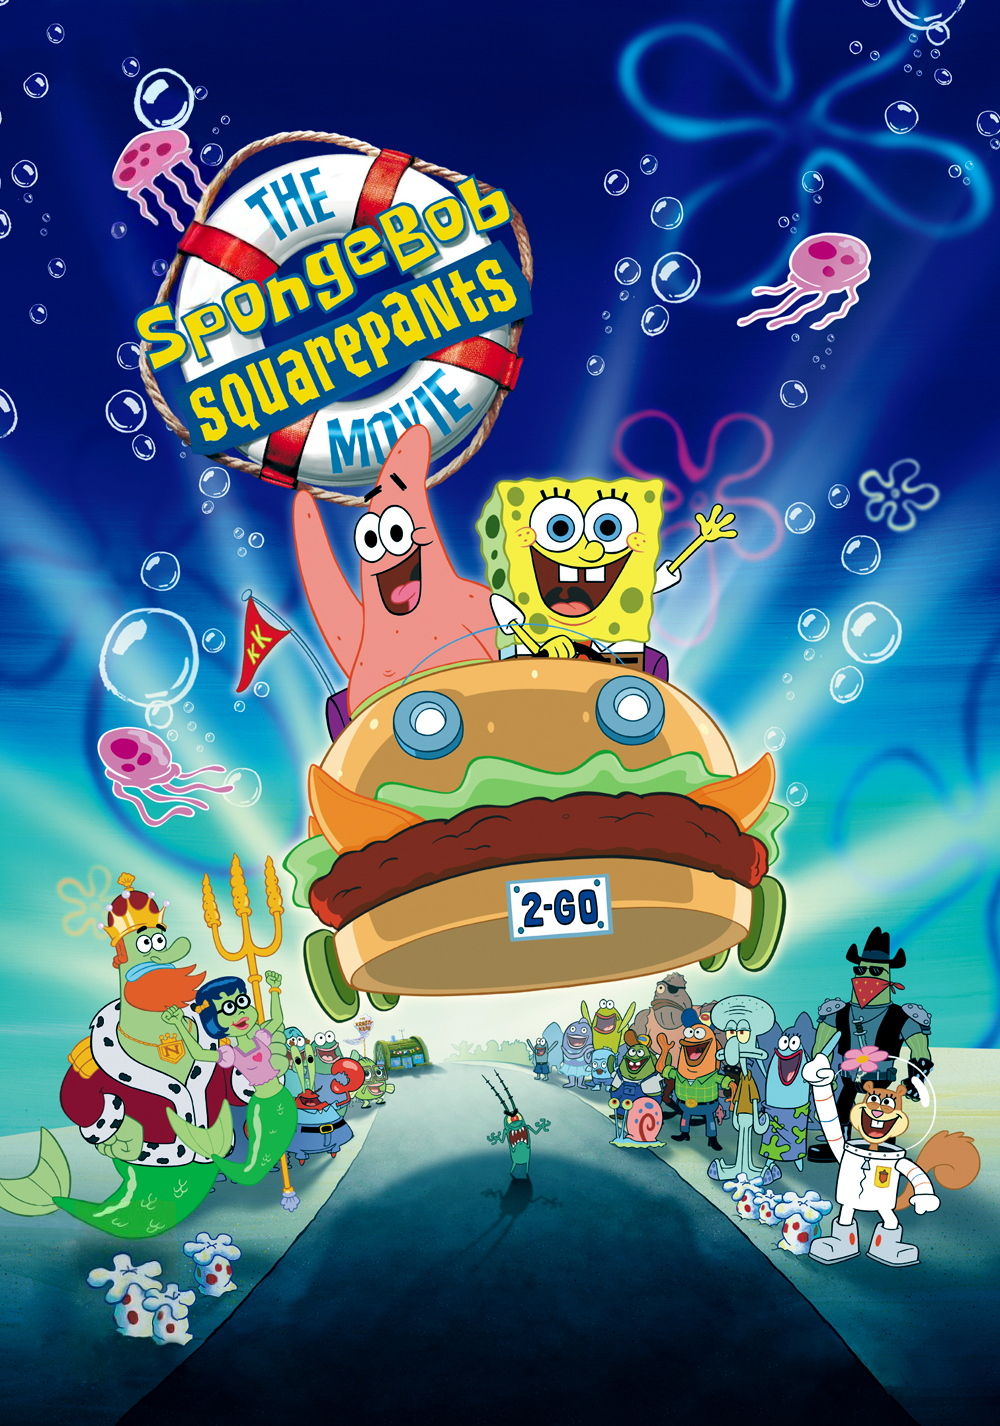 Download free spongebob squarepants movie